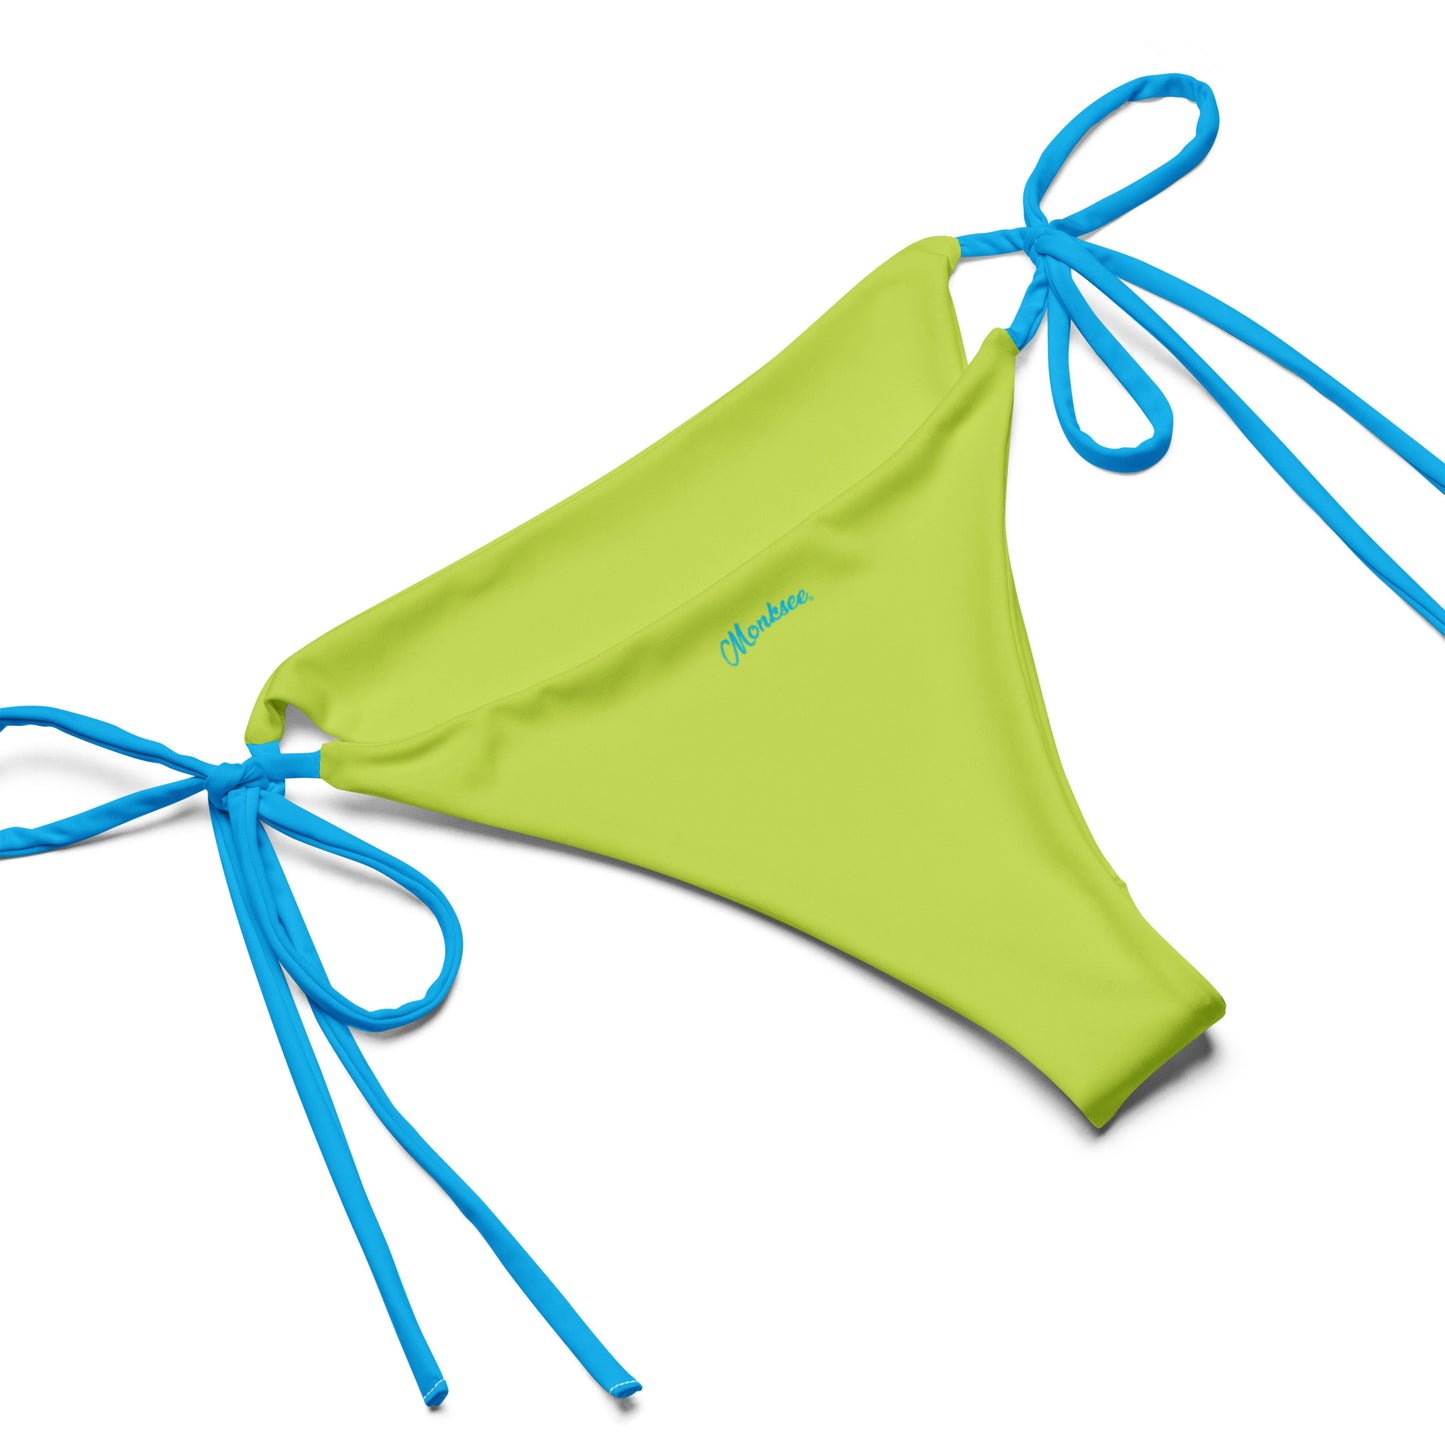 The Limes - Monksee String Bikini